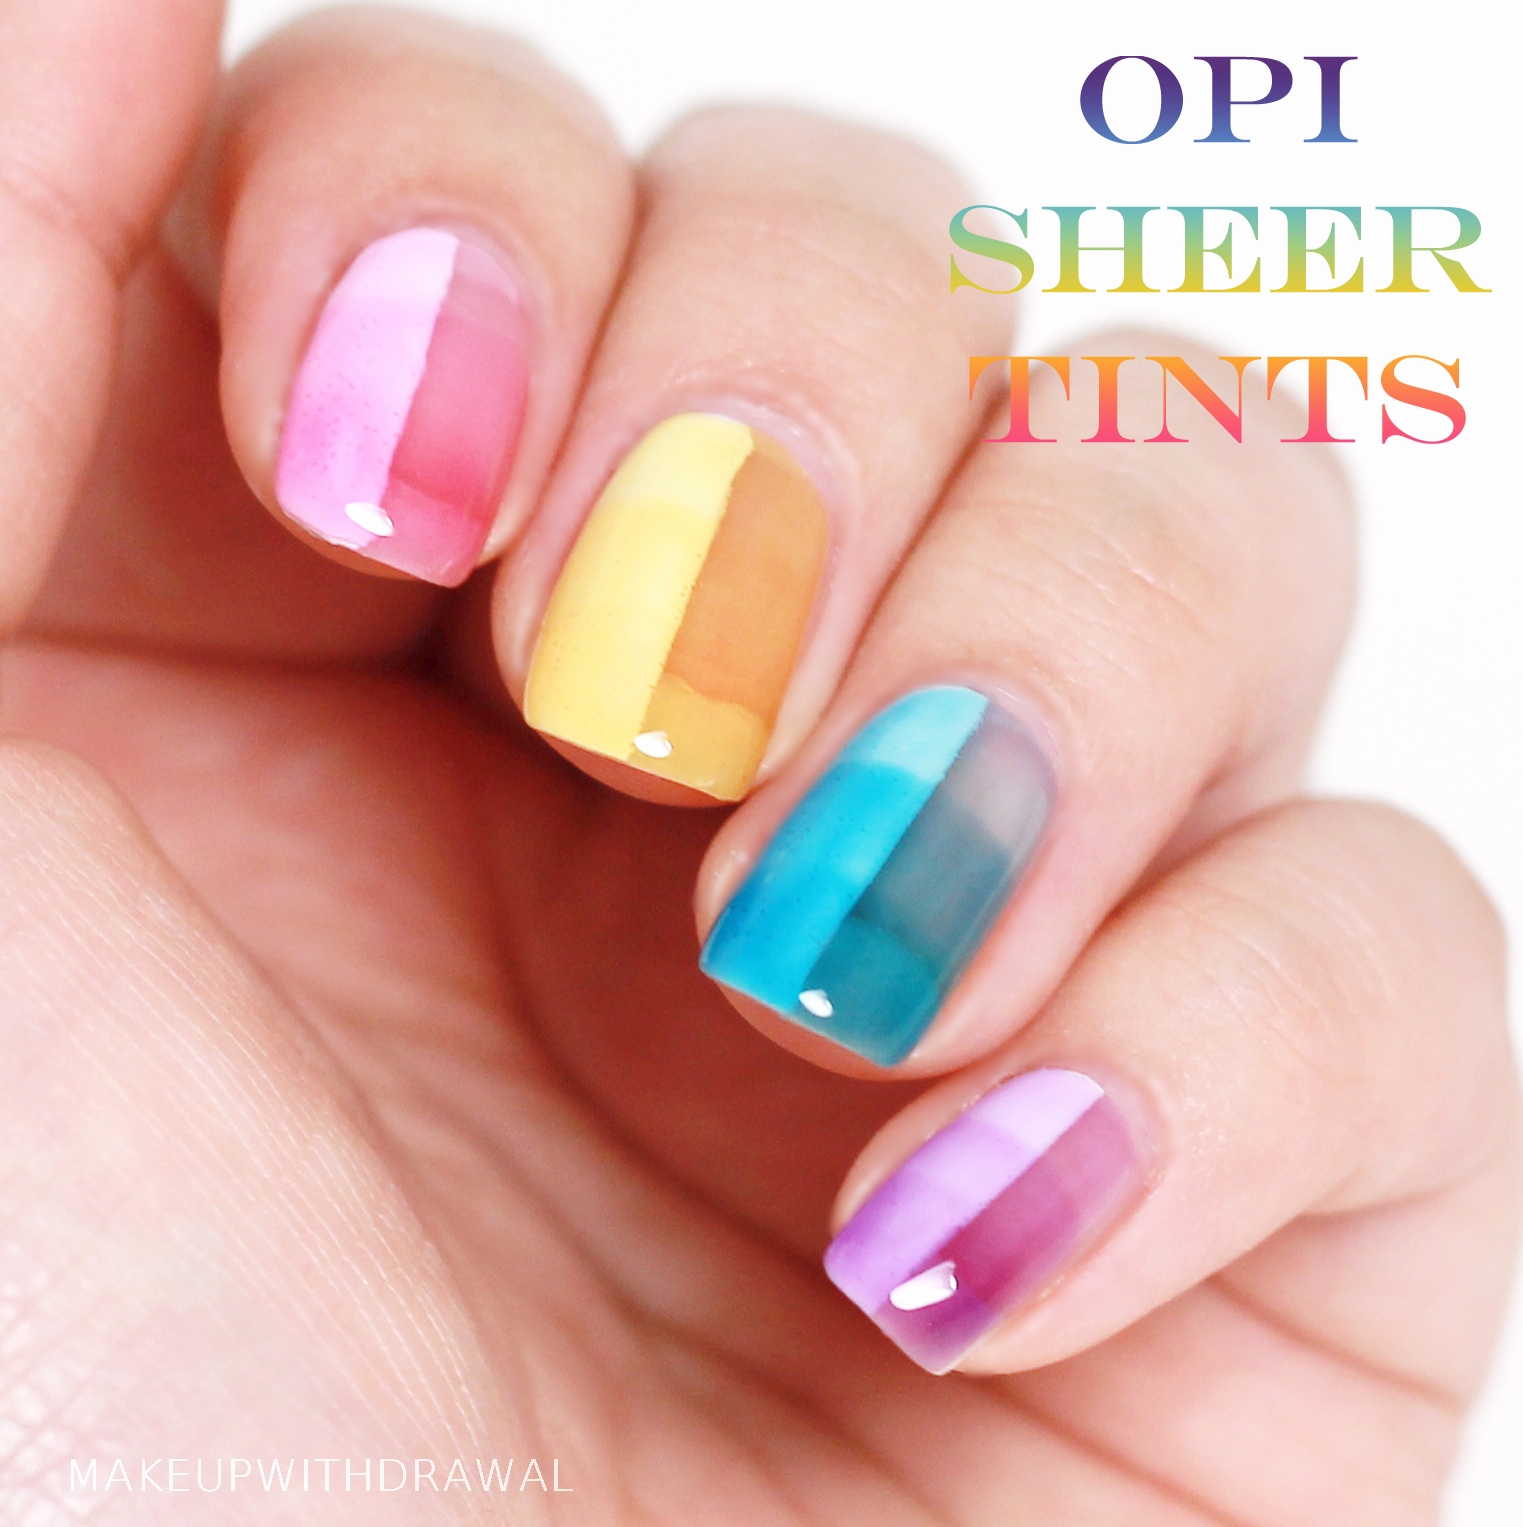 OPI Sheer Tints | Makeup Withdrawal